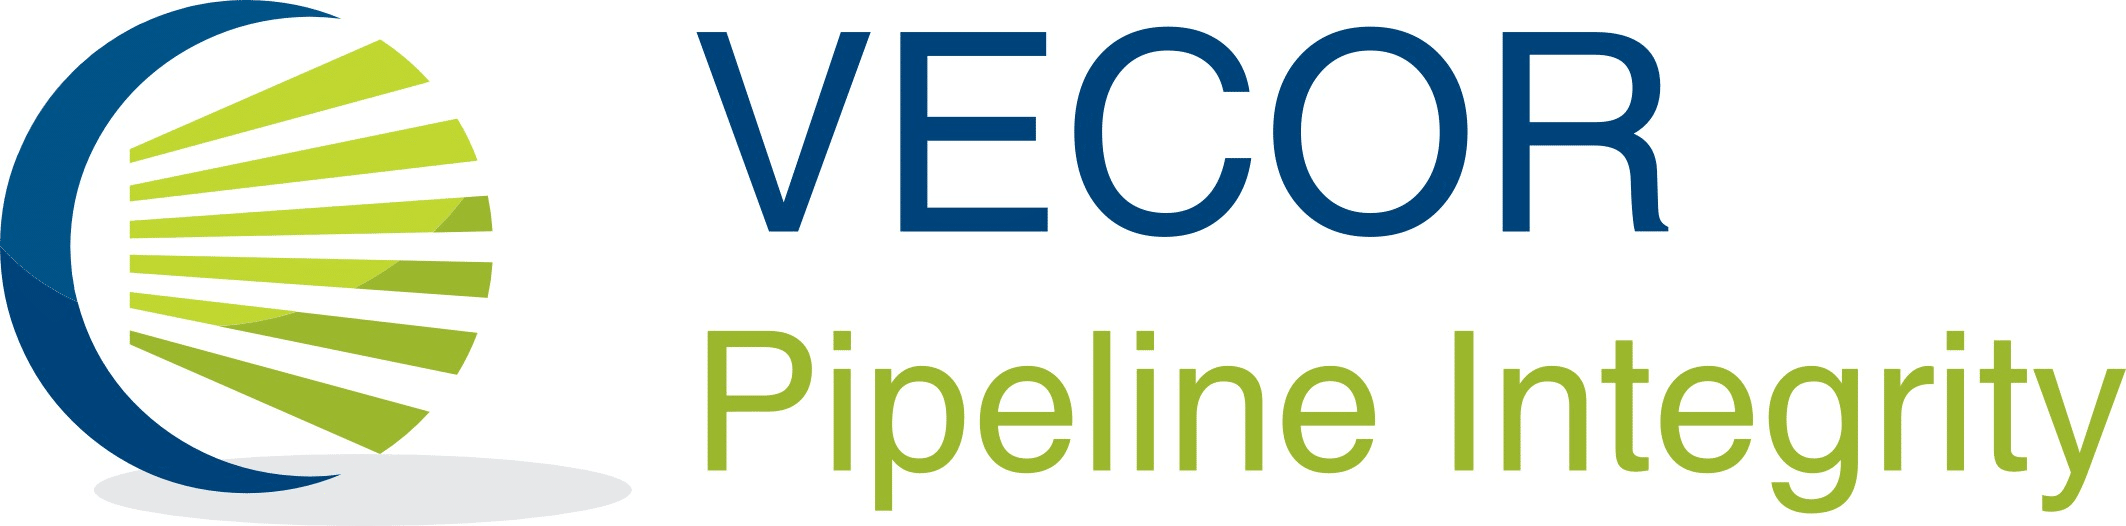 VECOR Pipeline Integrity